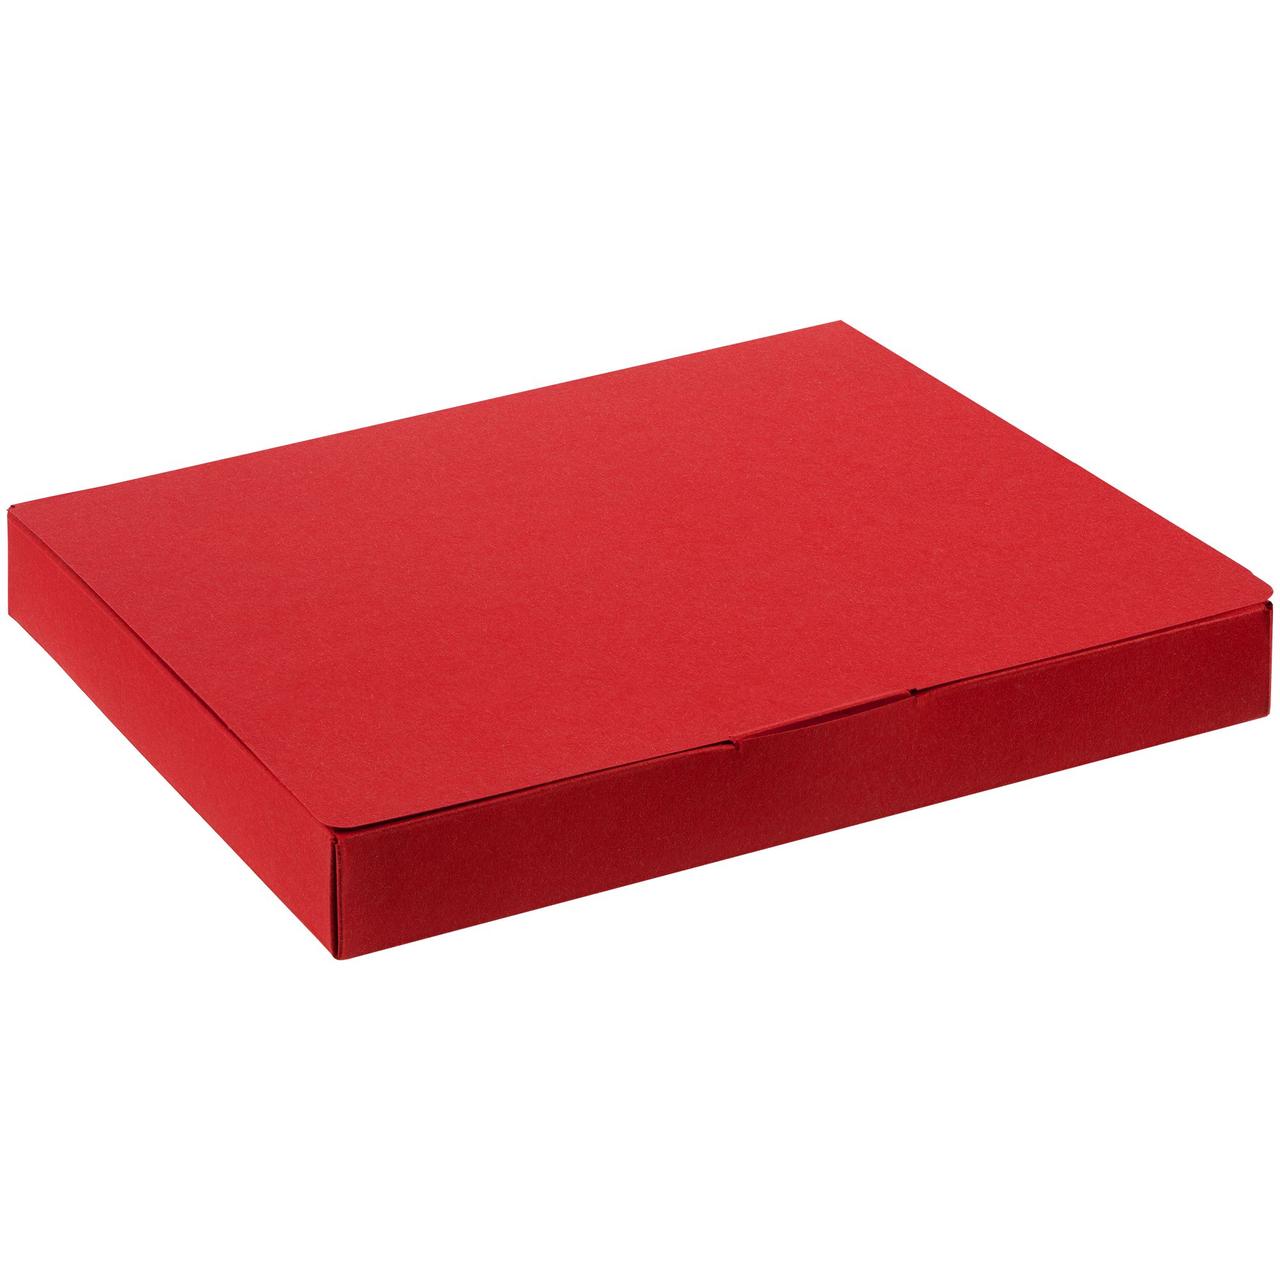 Коробка самосборная Flacky Slim, красная (артикул 12207.50)